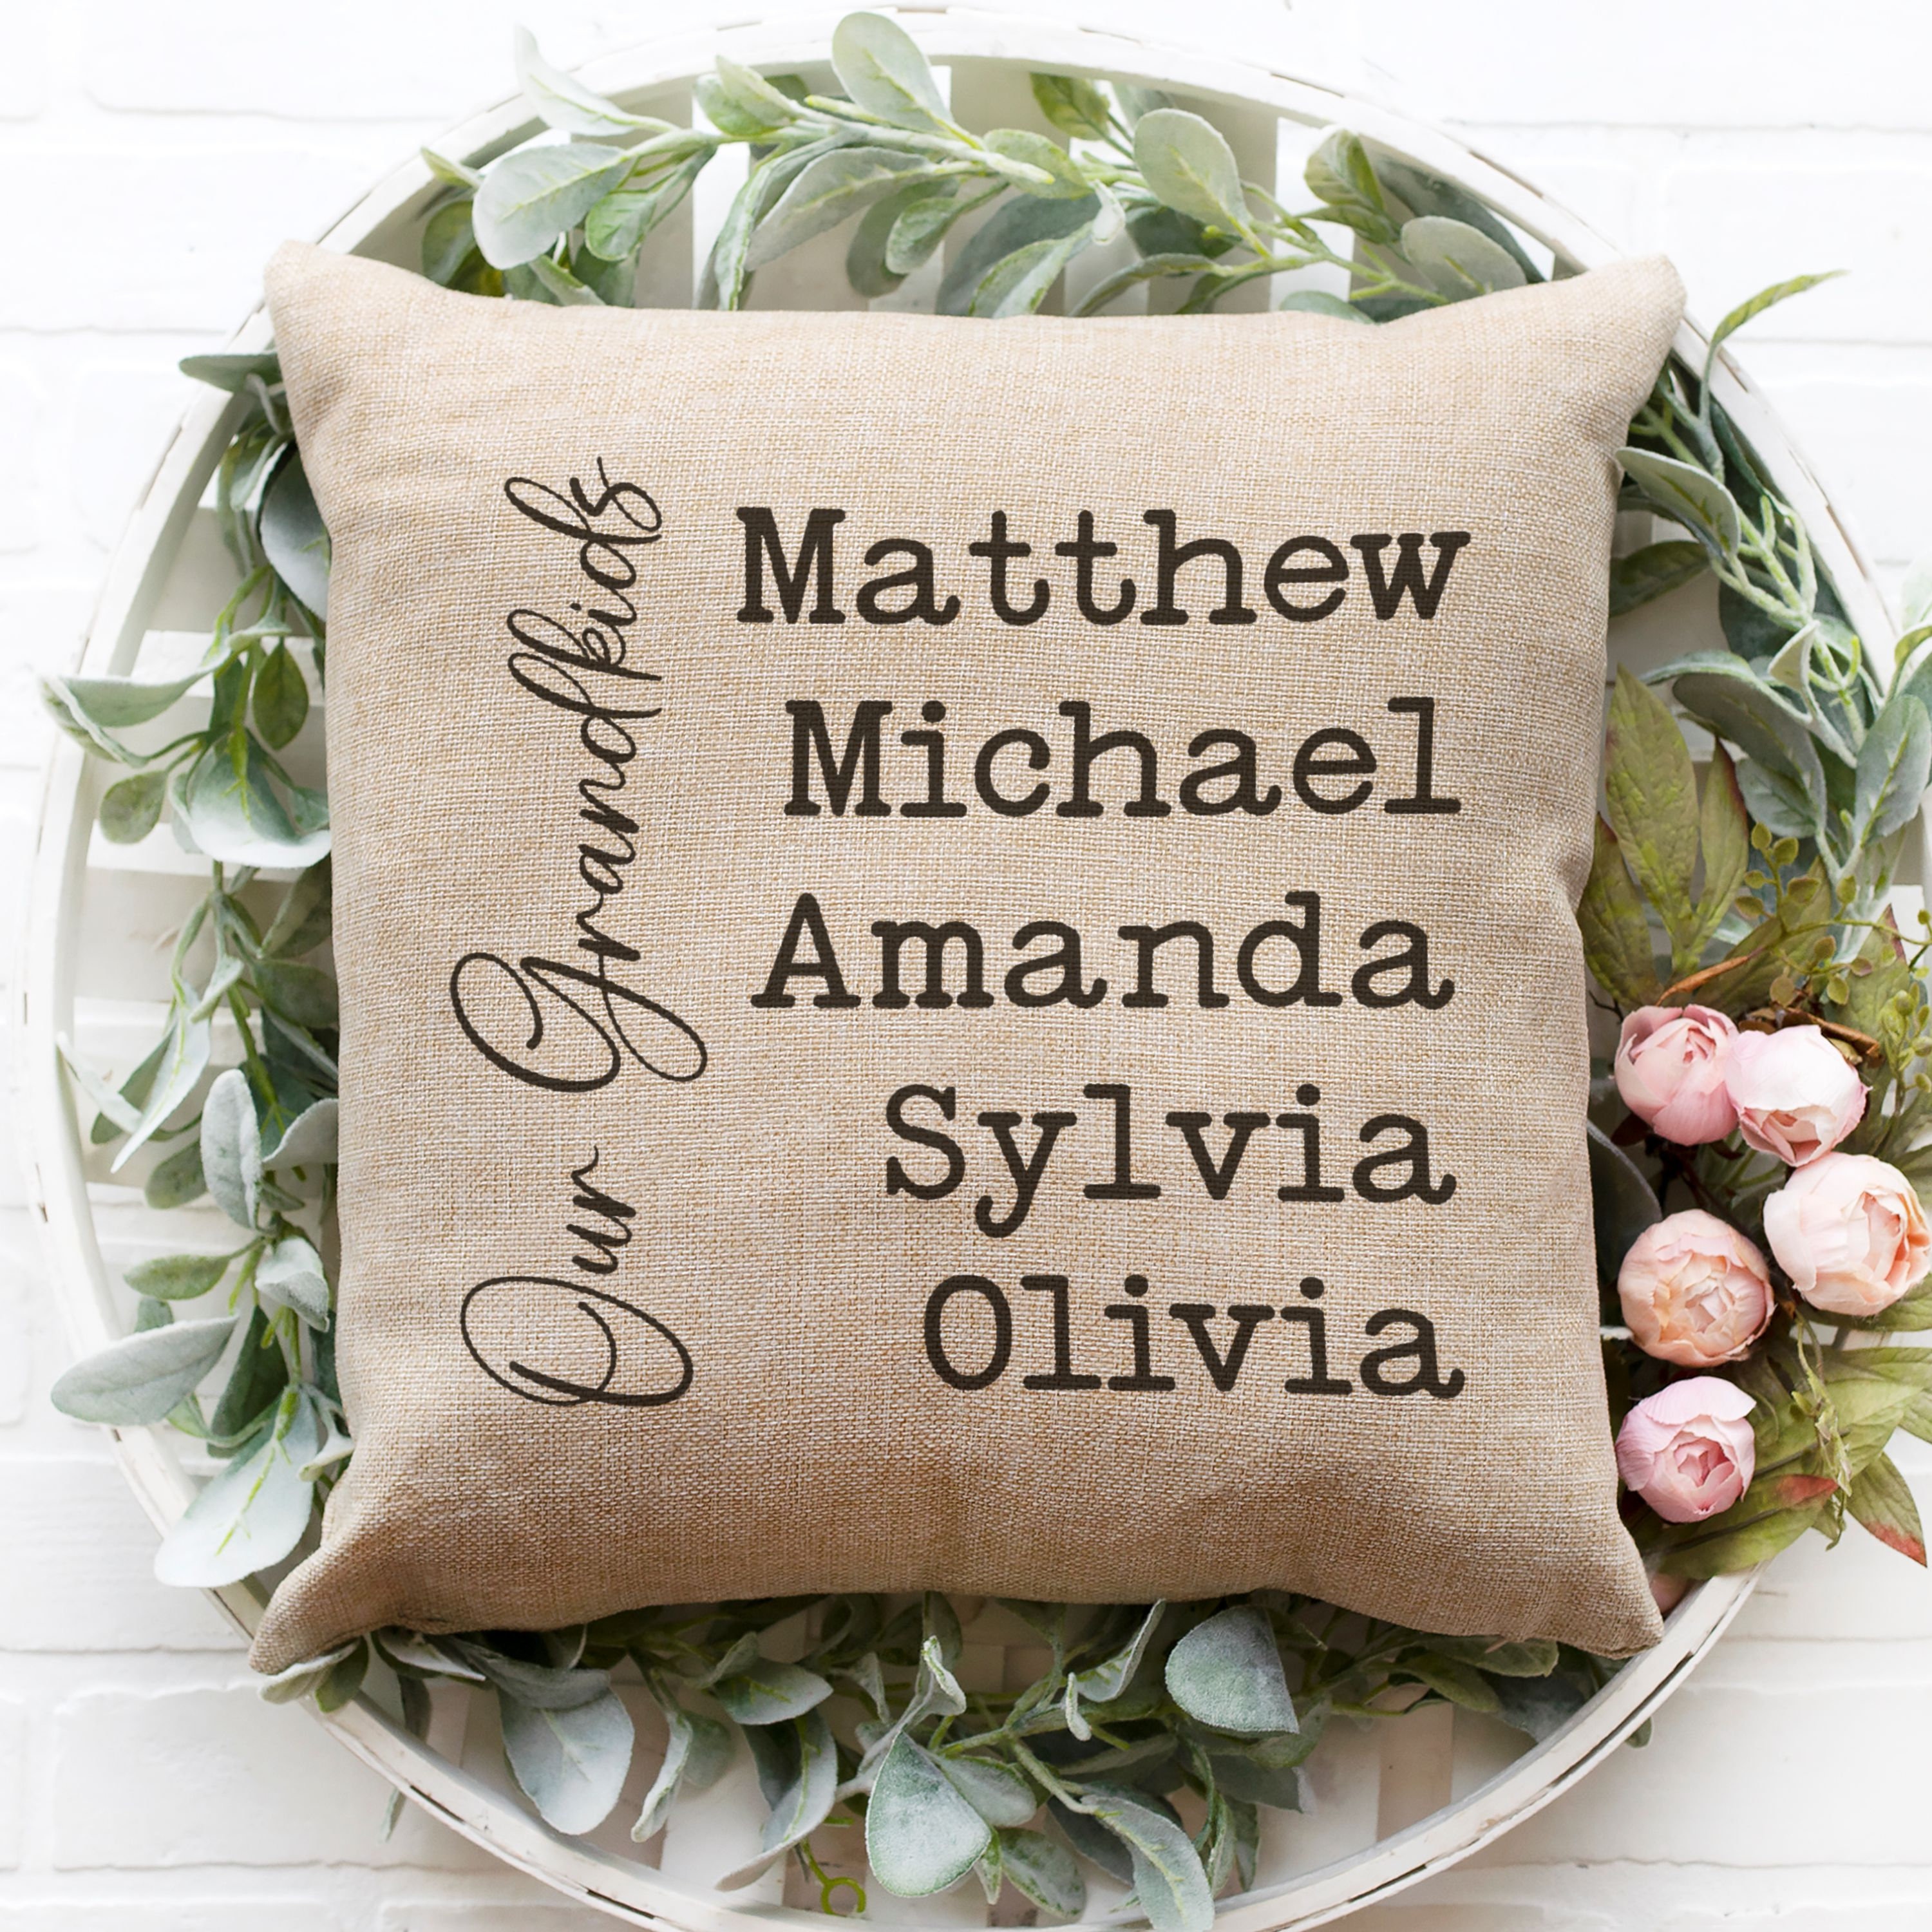 Personalized Grandkids pillow – Stitch & Scribe